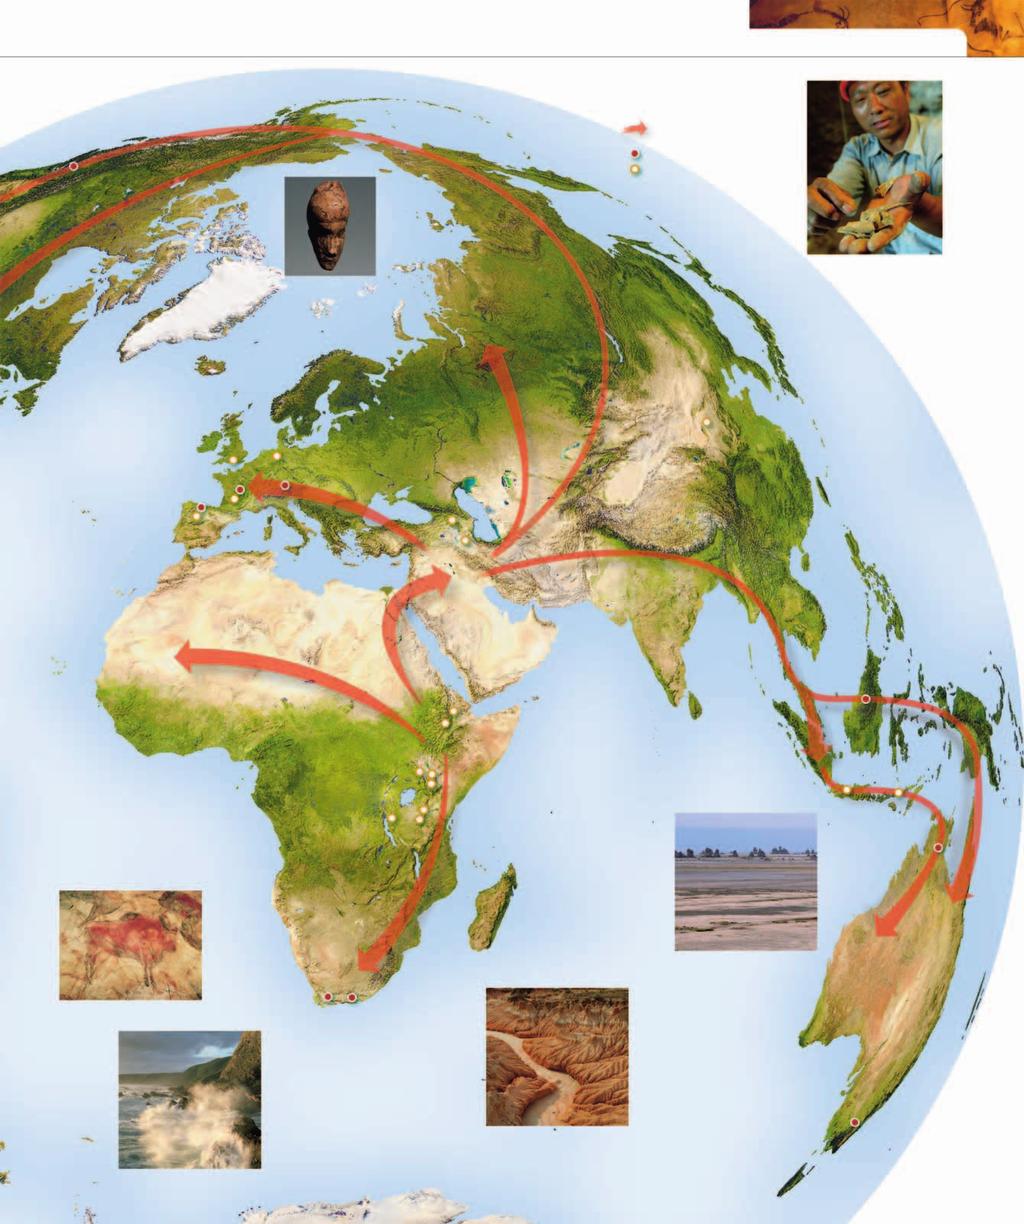 OUT OF AFRICA Kennewick A M E R I C A 15,000 YEARS AGO Beringia Land Bridge KEY Migration of Homo sapiens around the world Site of early Homo sapiens find Site of early Hominin find This mammoth bone